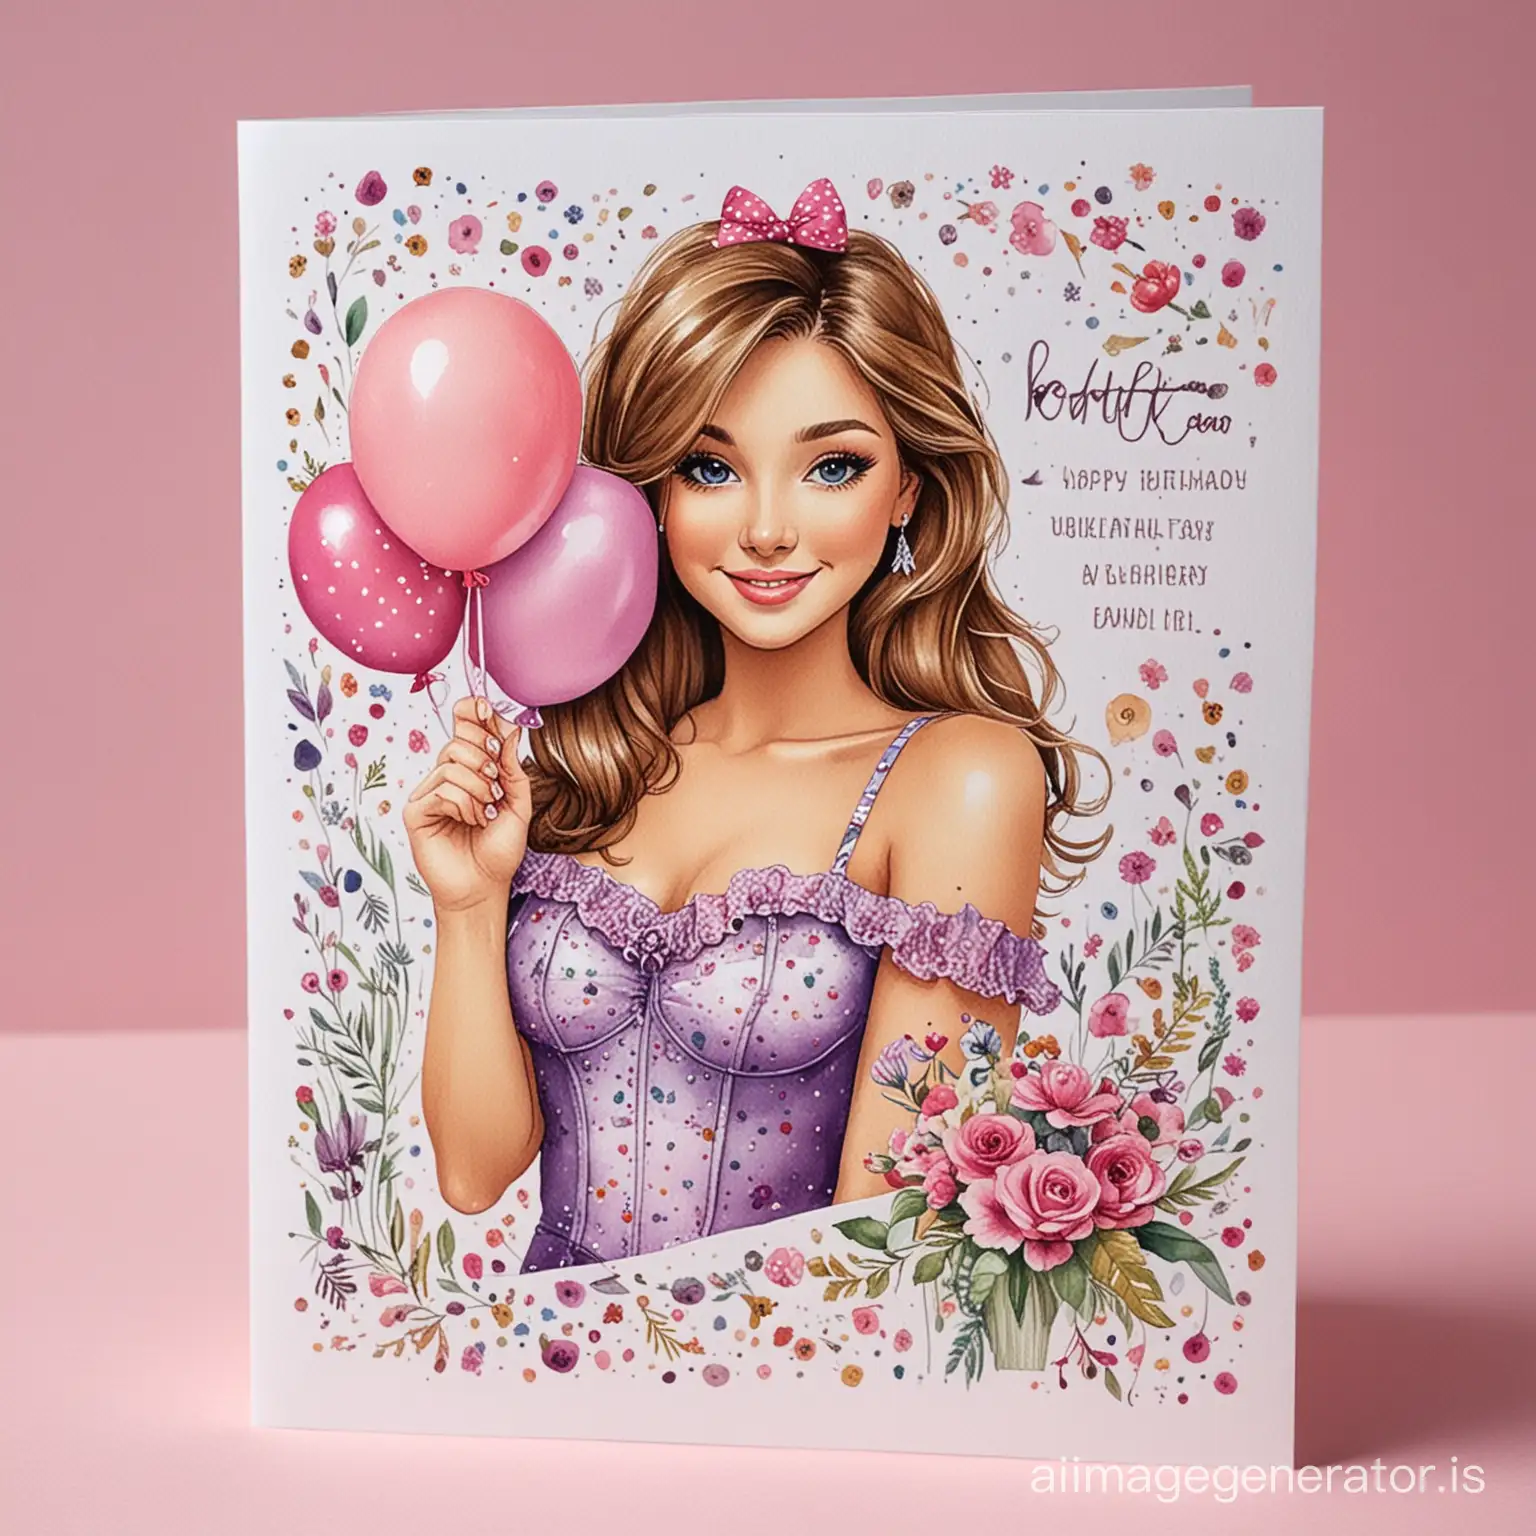 Elegant-Birthday-Card-Design-for-a-Cherished-Young-Female-Friend